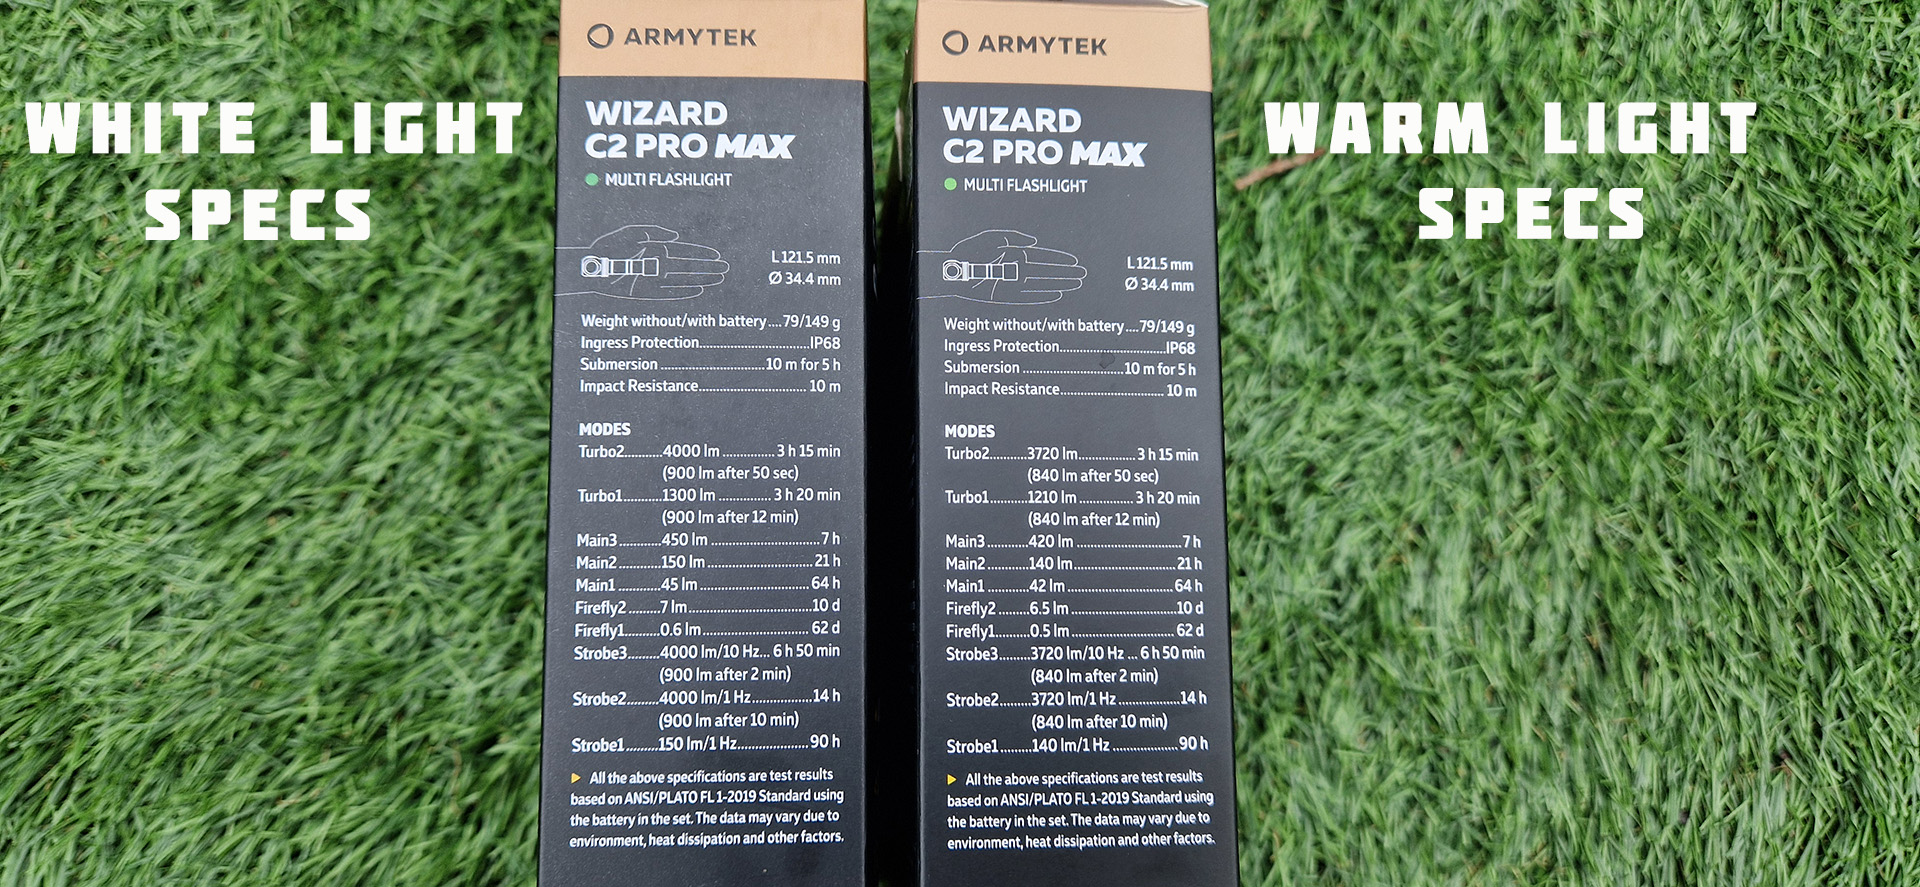 C2 pro max multi-flashlight specifications